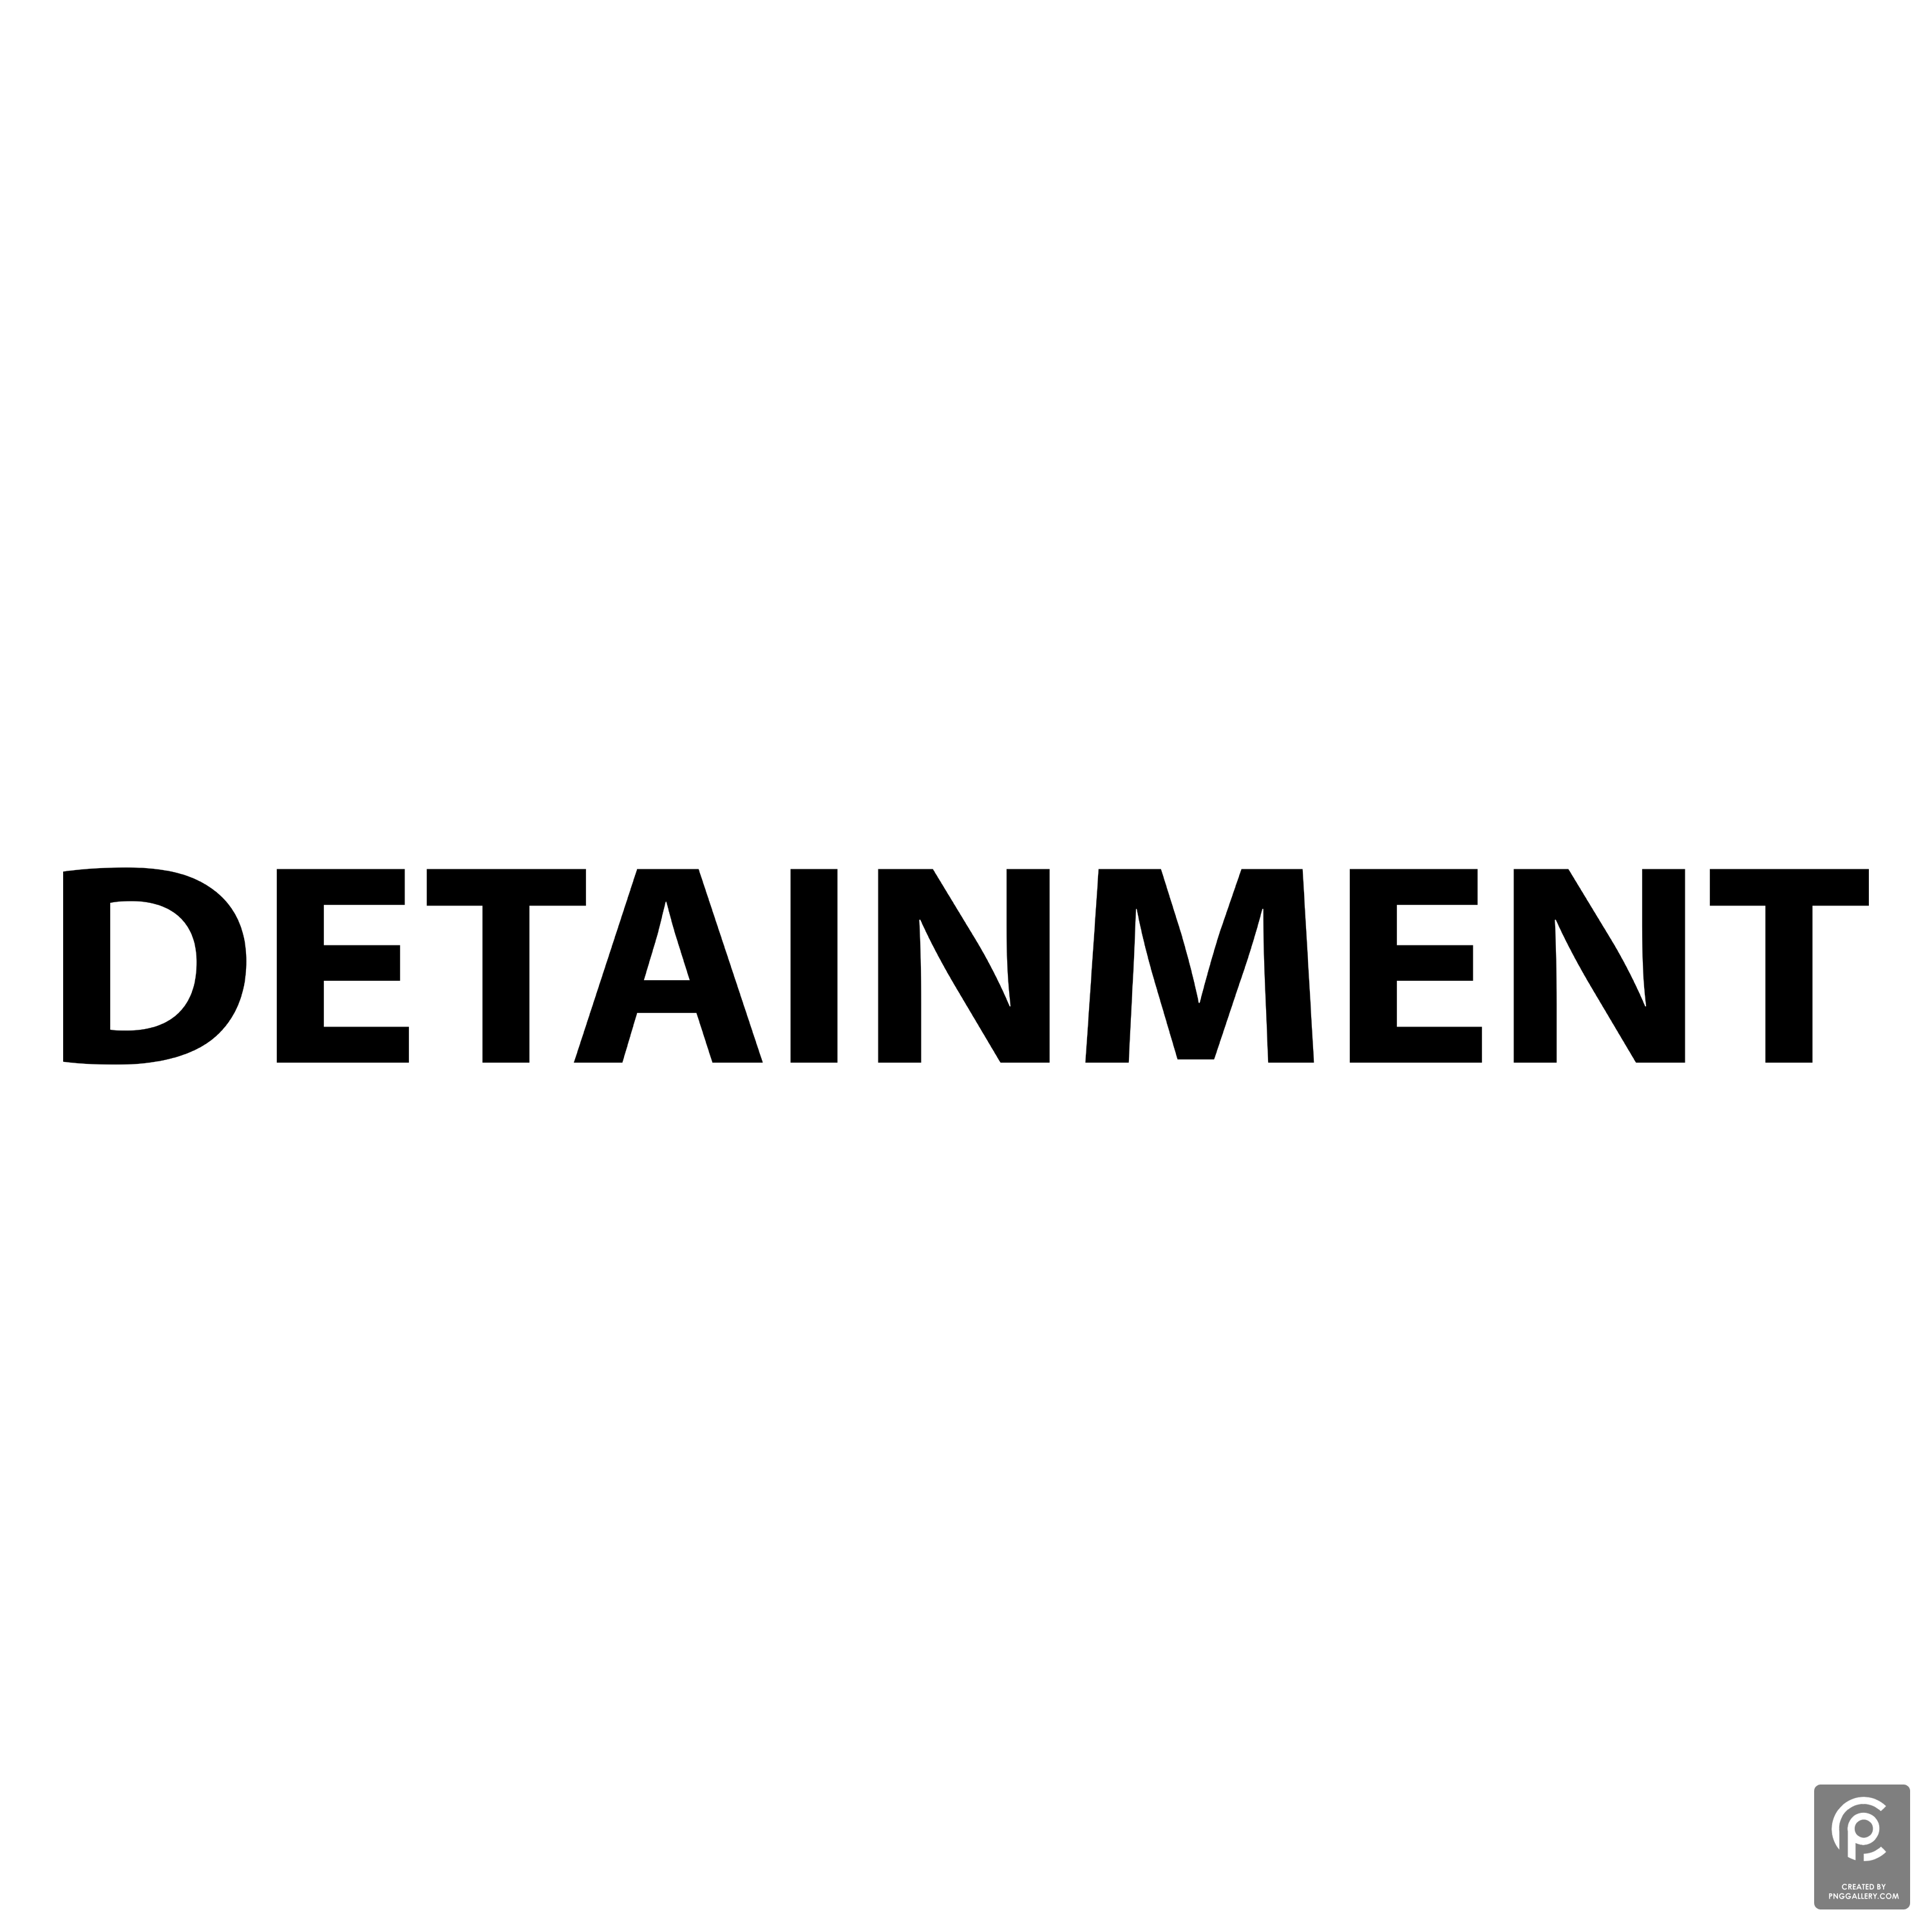 Detainment Logo Transparent Photo